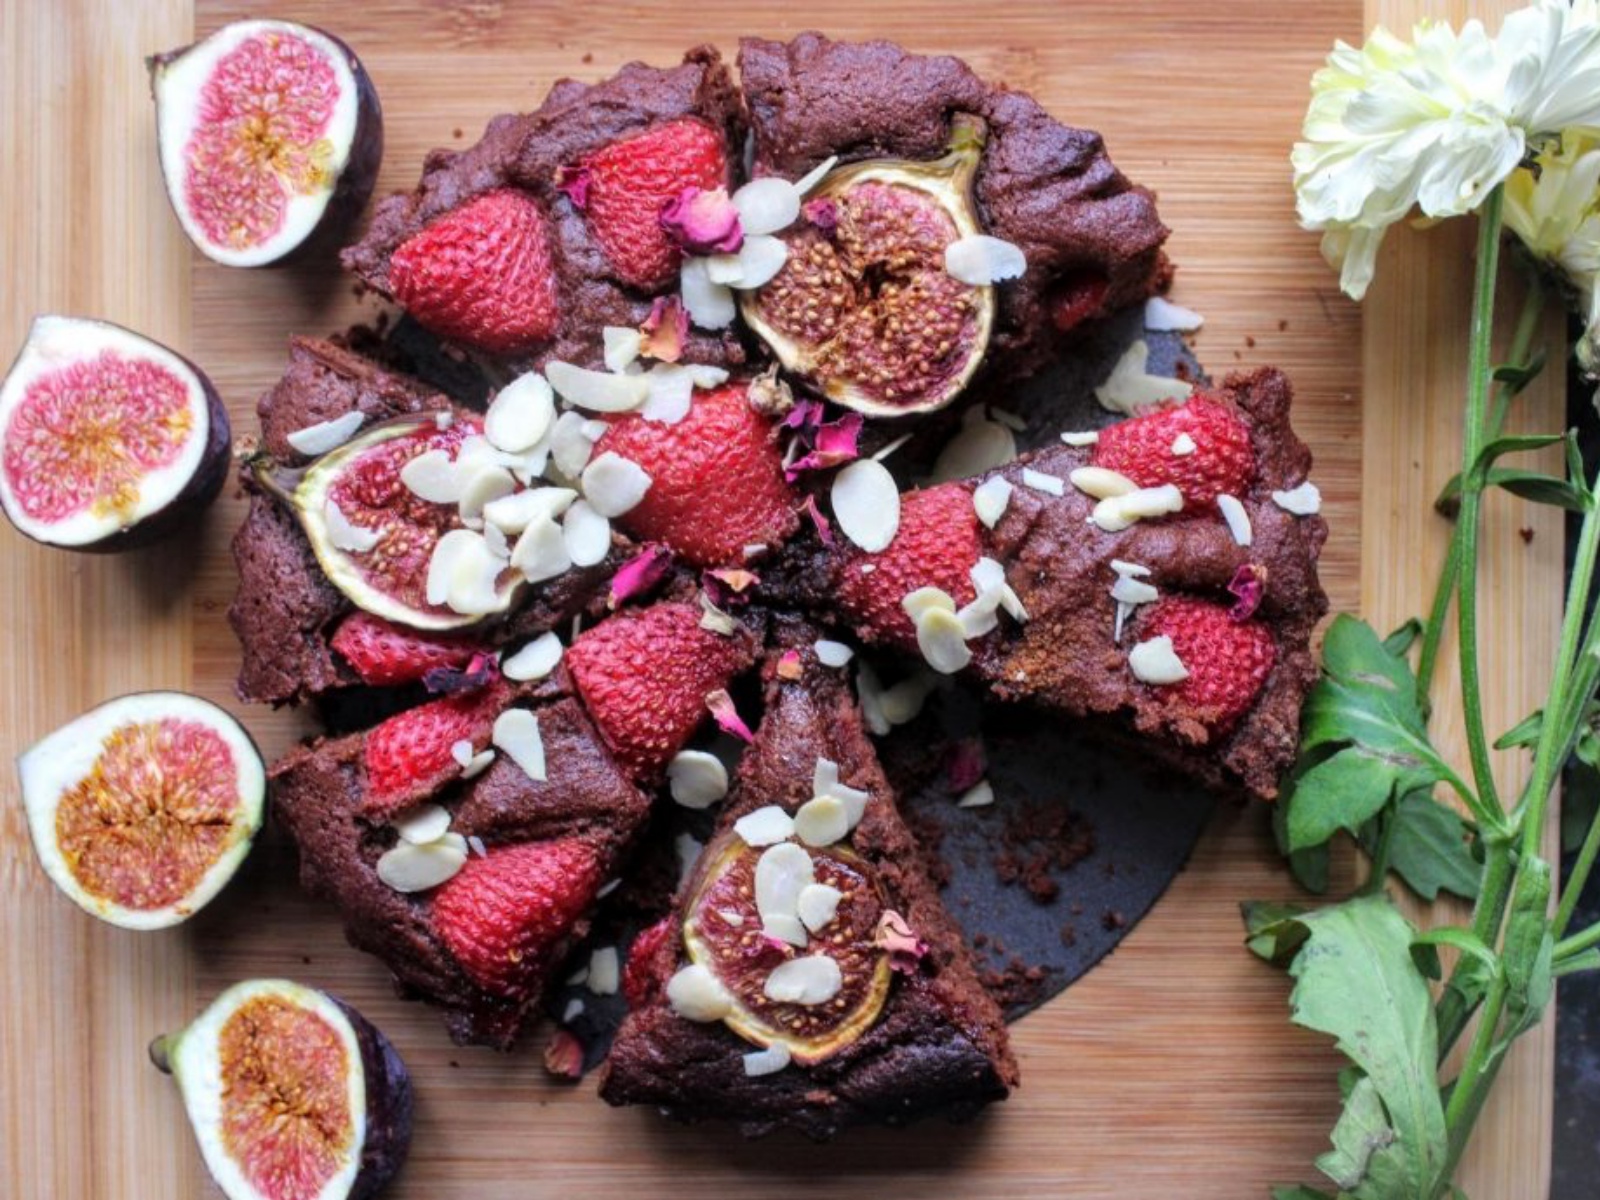 Chocolate cake, figs and raspberries